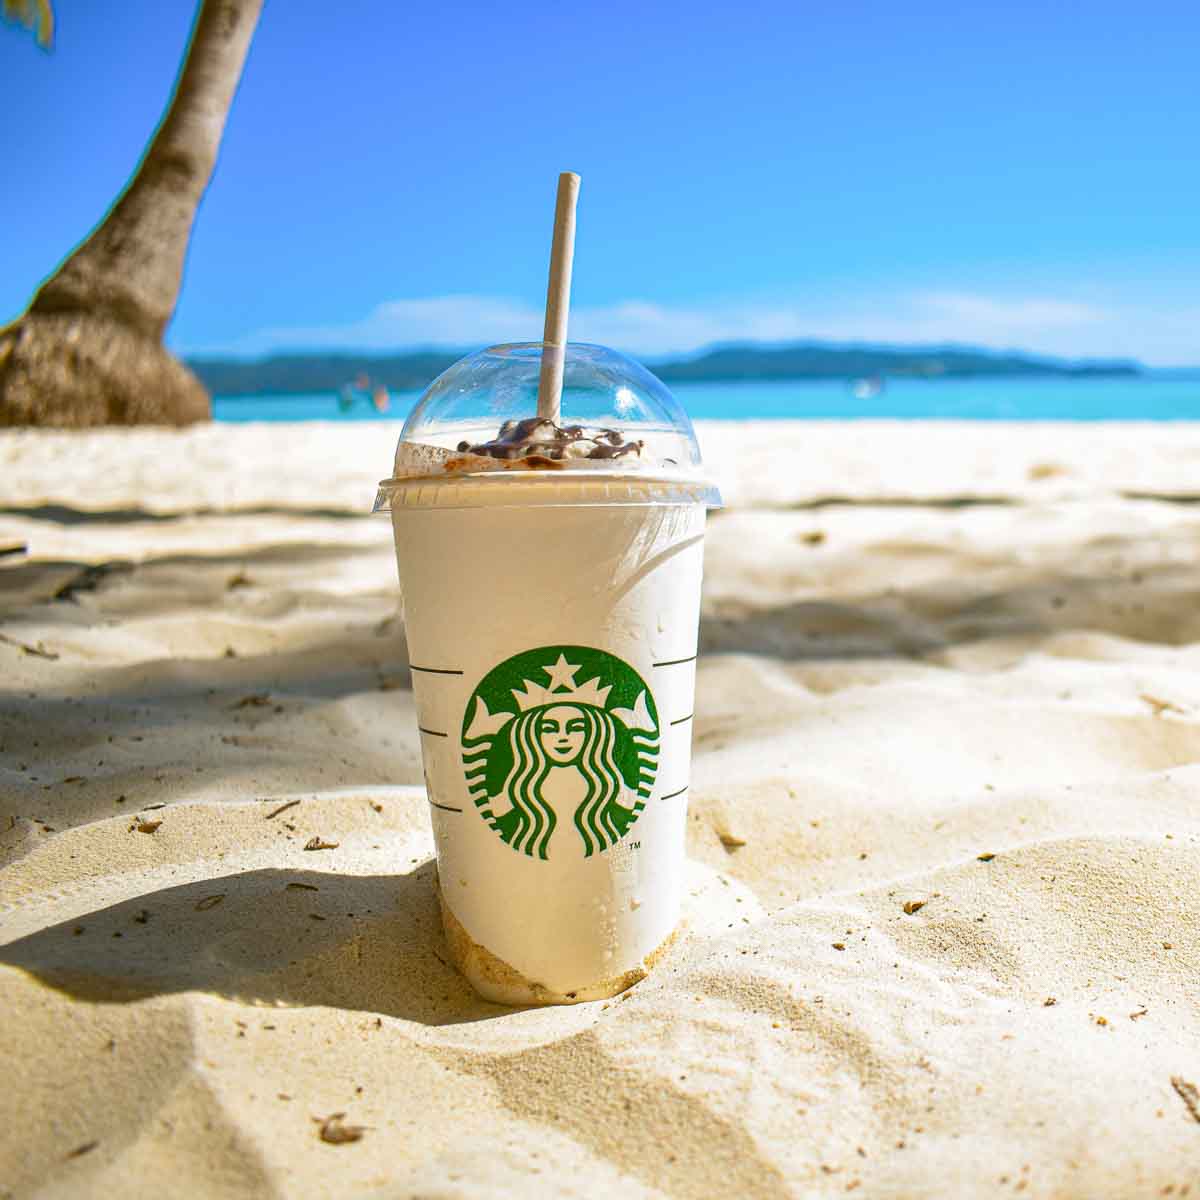 Starbucks Drink on a beach.